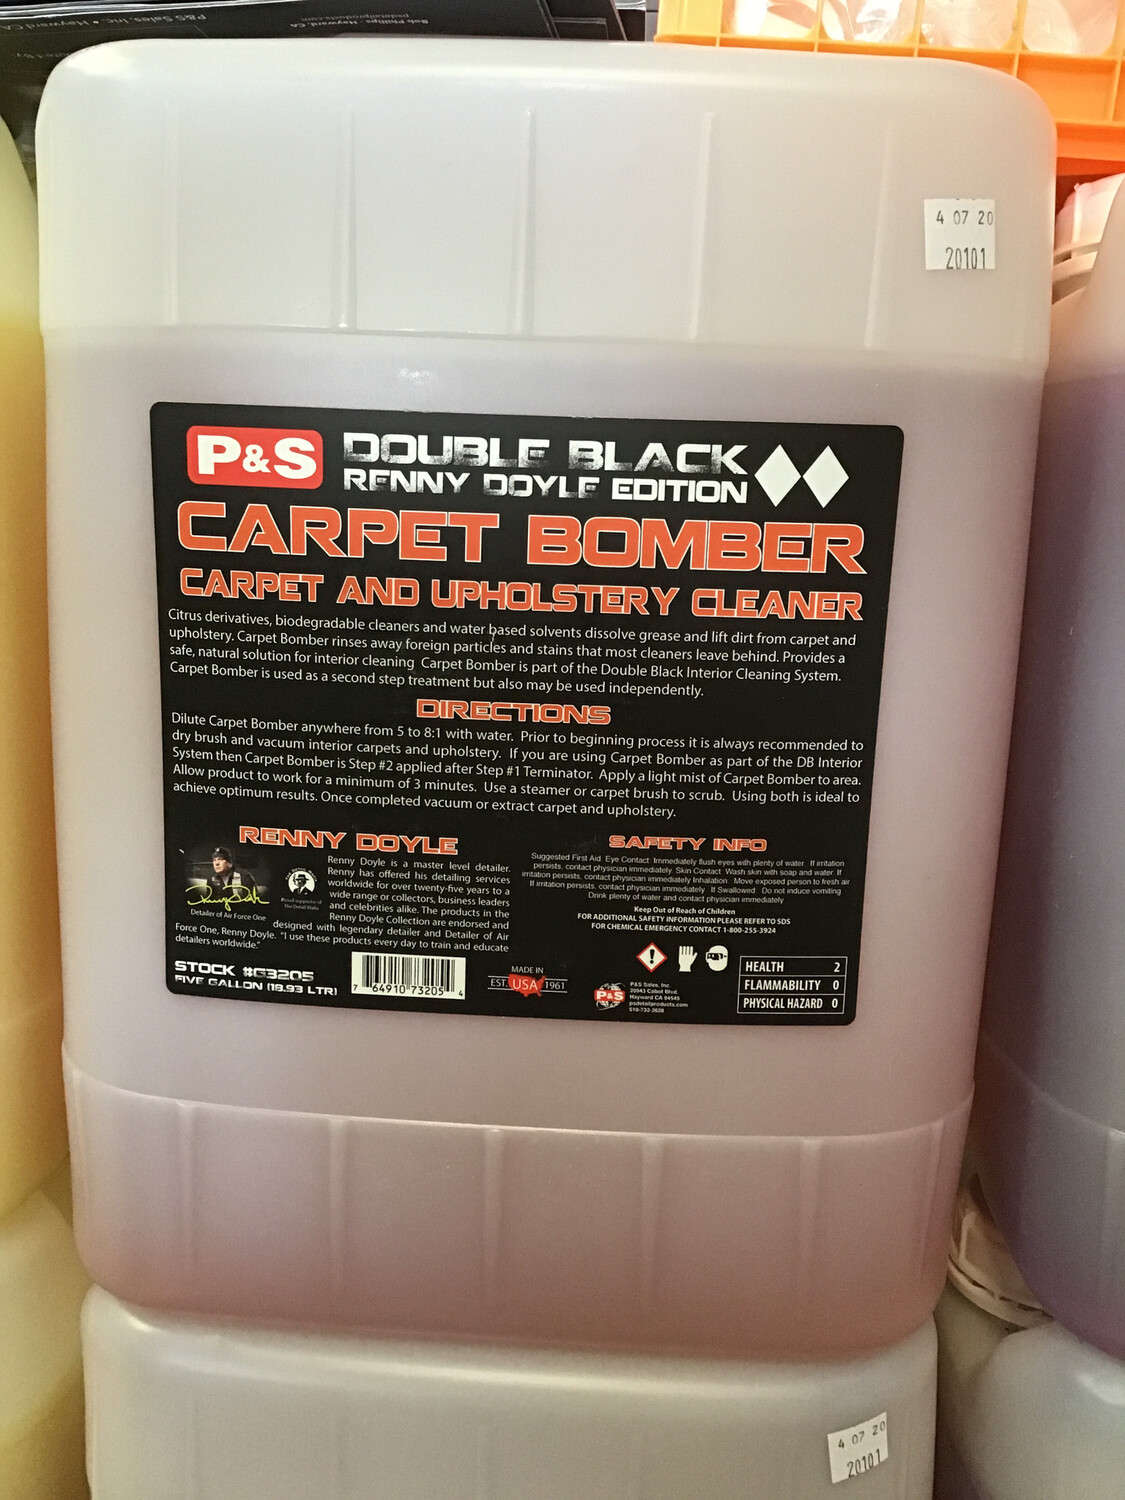 P&S Carpet Bomber Carpet And Upholstery Cleaner - 5 Gallon